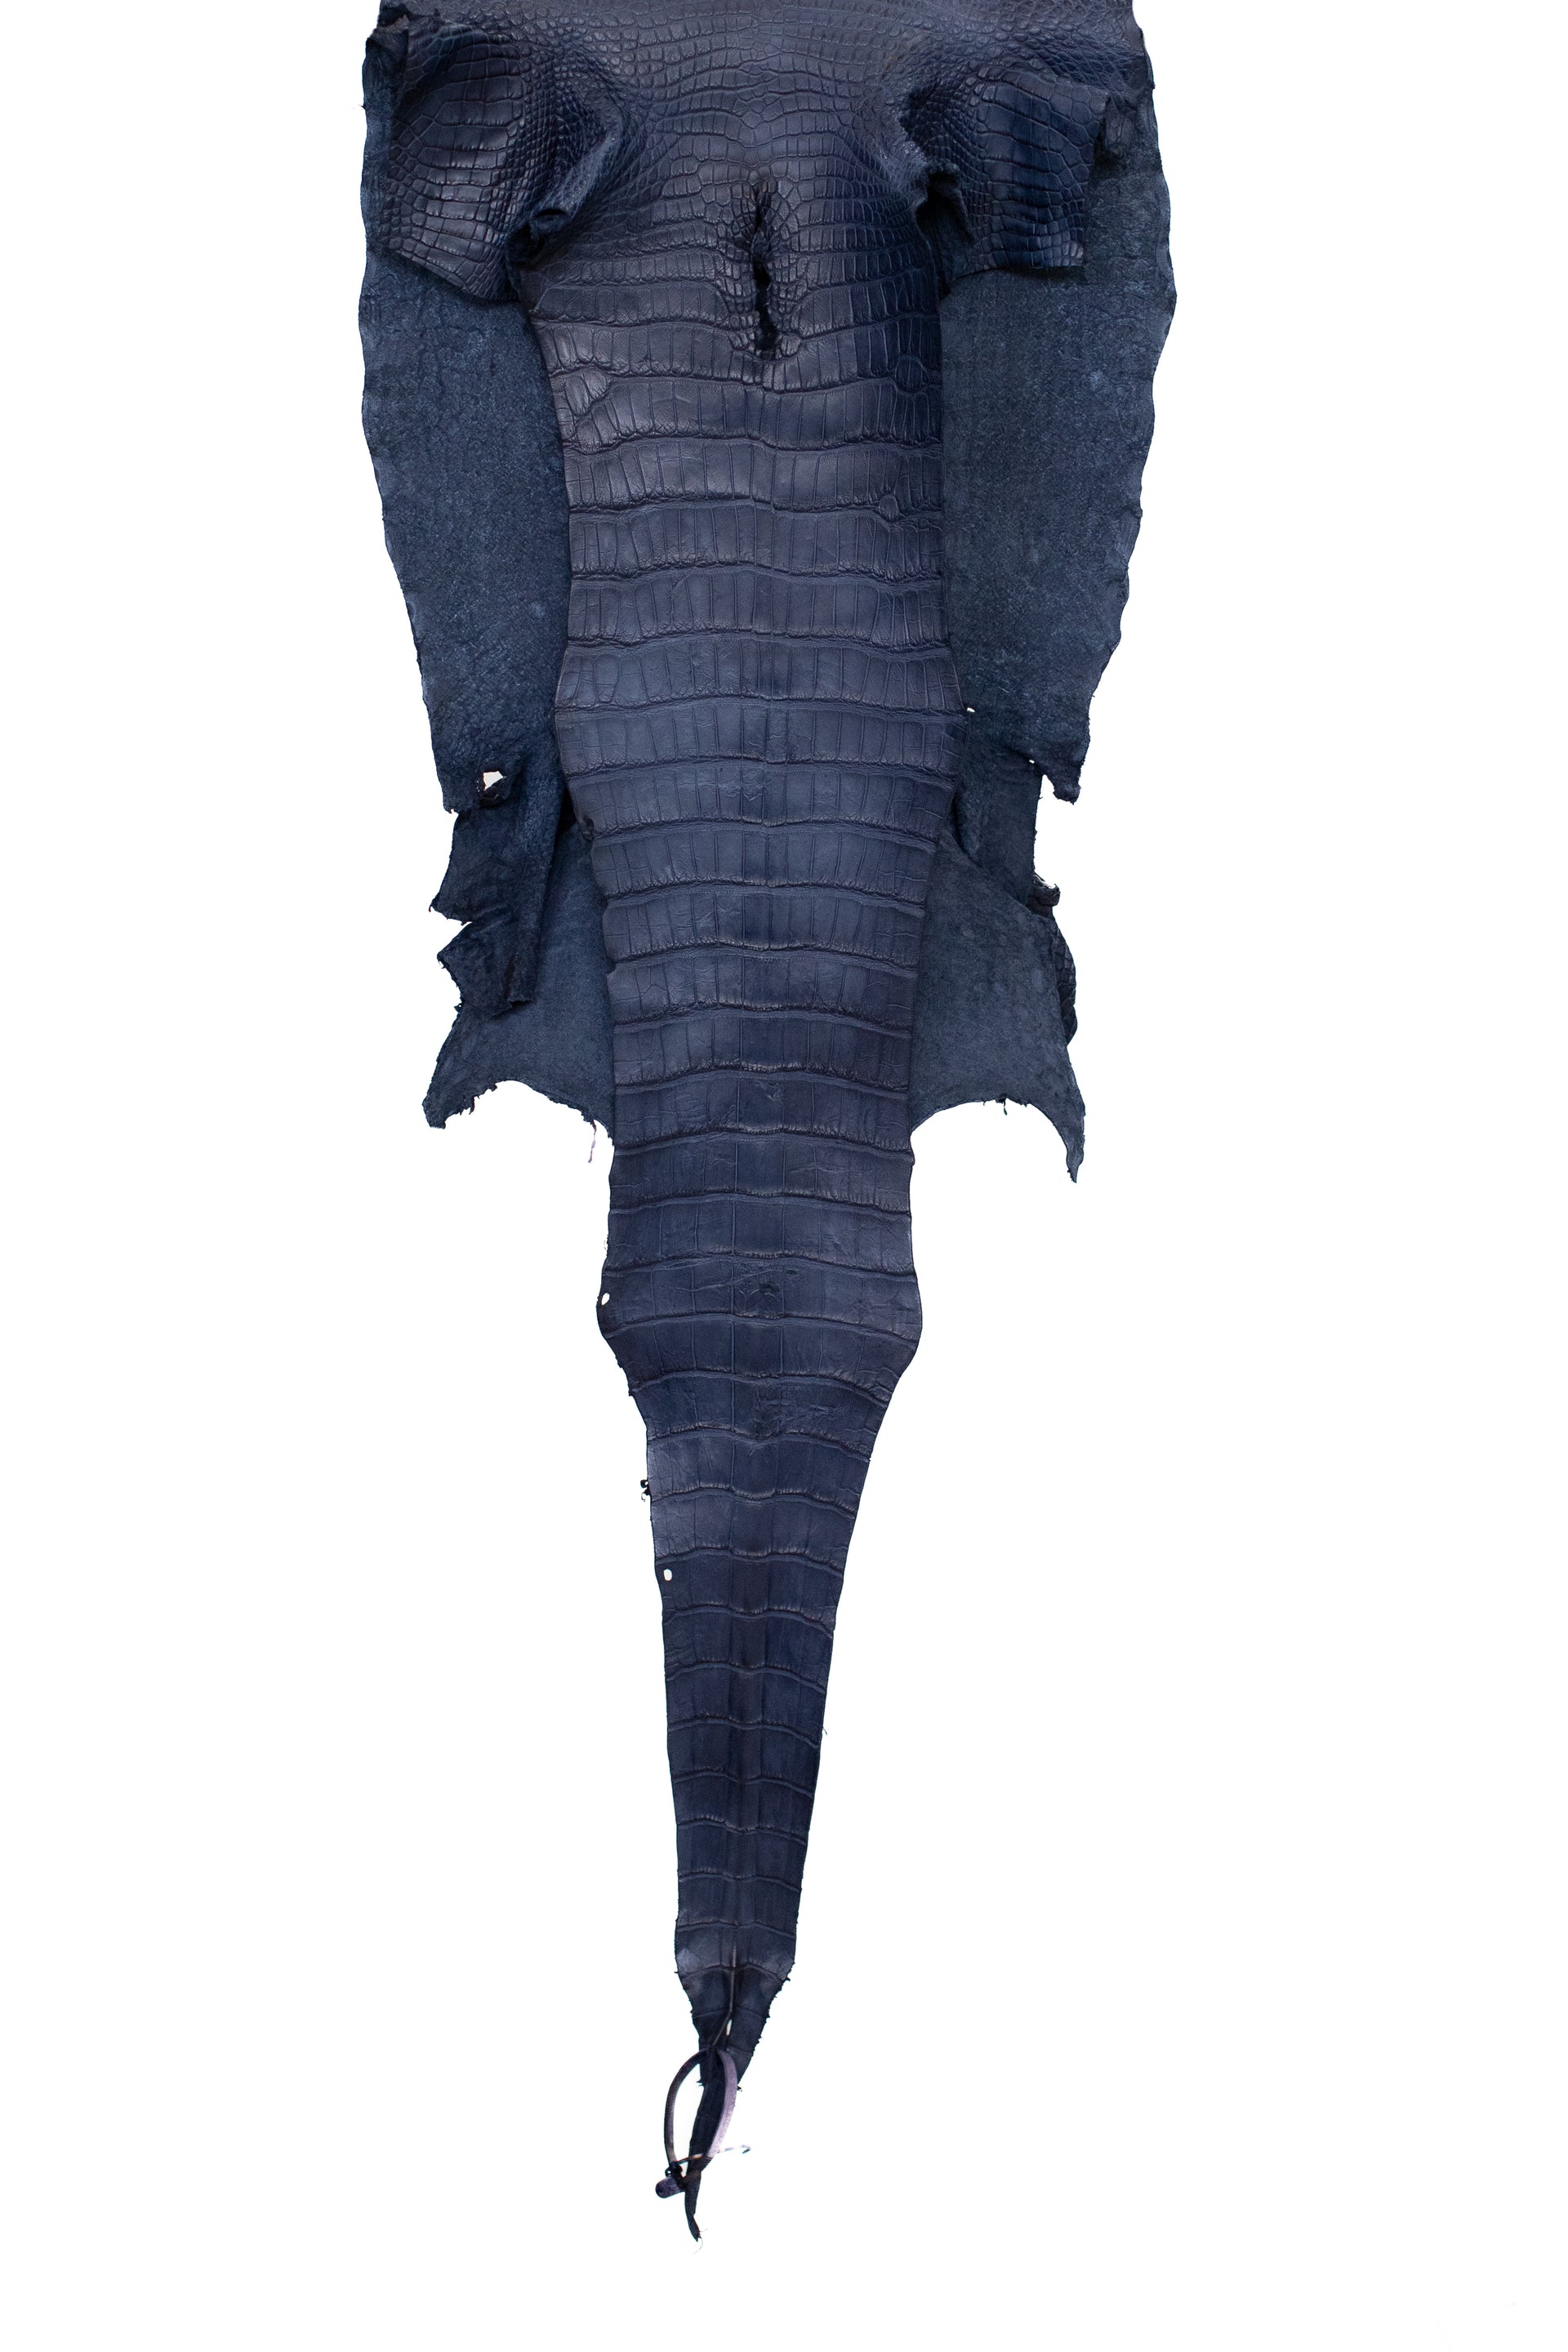 42 cm Grade 3/4 Navy Blue Matte Wild American Alligator Leather - Tag: LA18-0013415